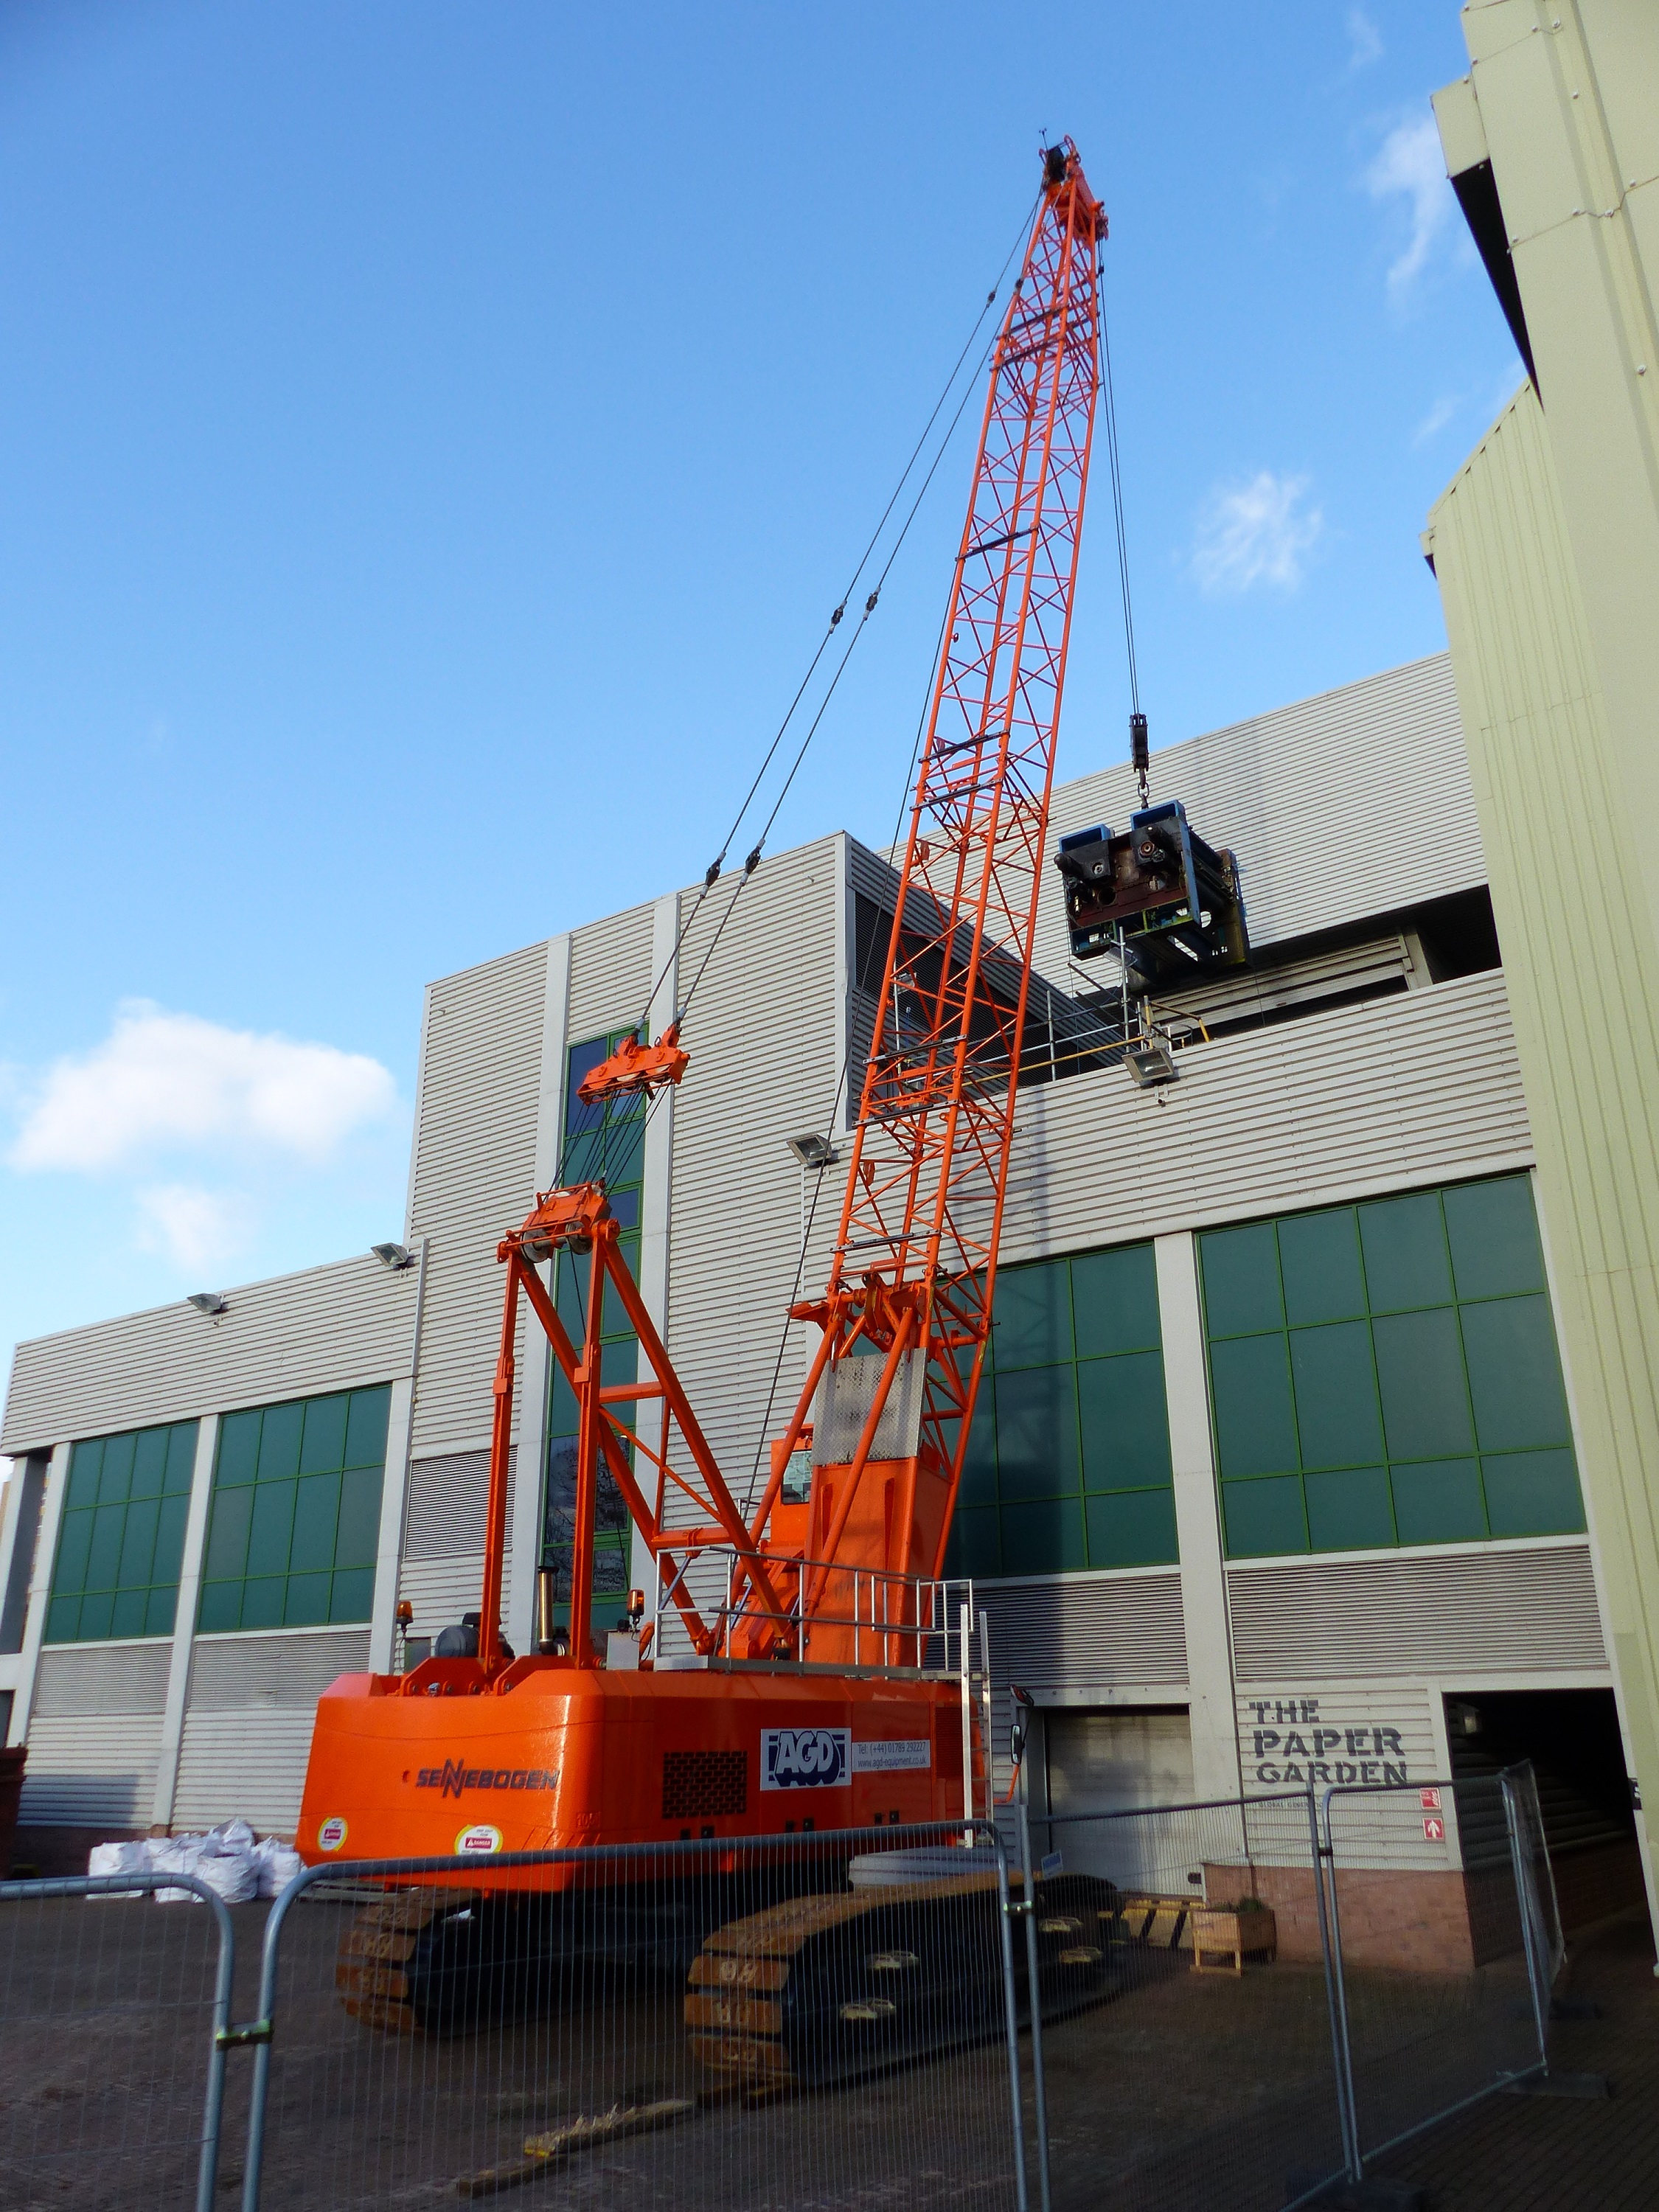 Sennebogen 680HD lattice boom crawler crane on hire in London